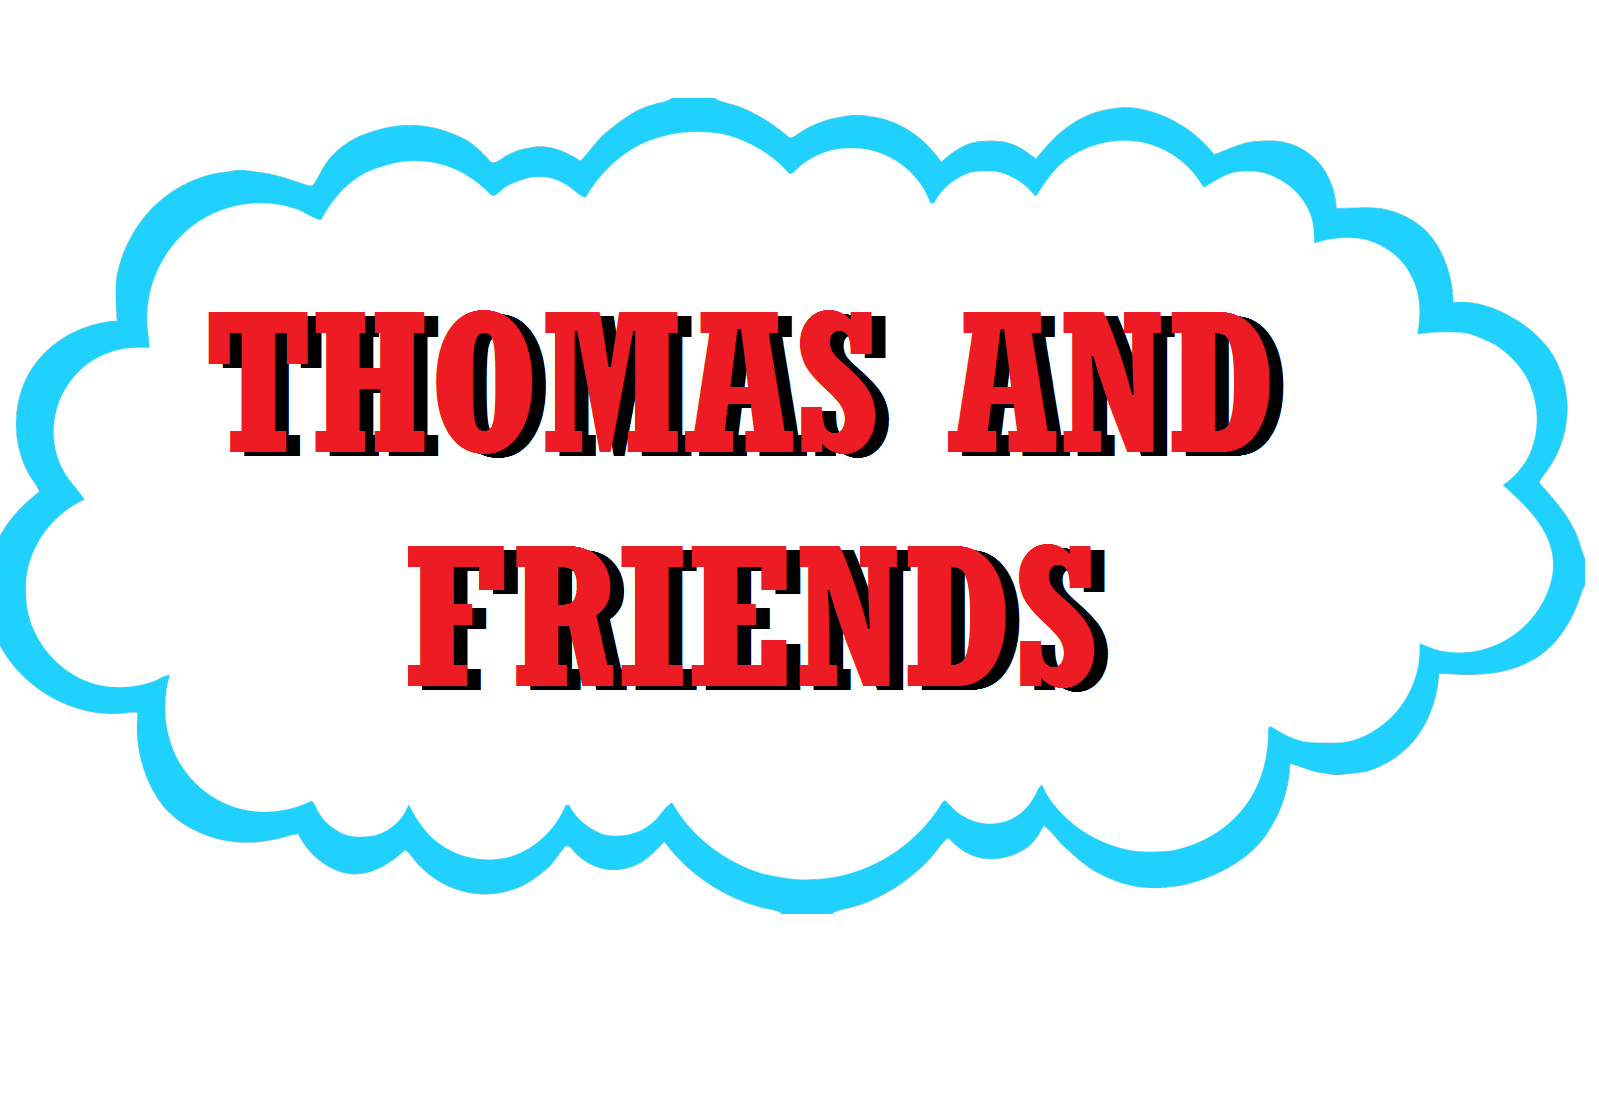 Thomas and friends Logos